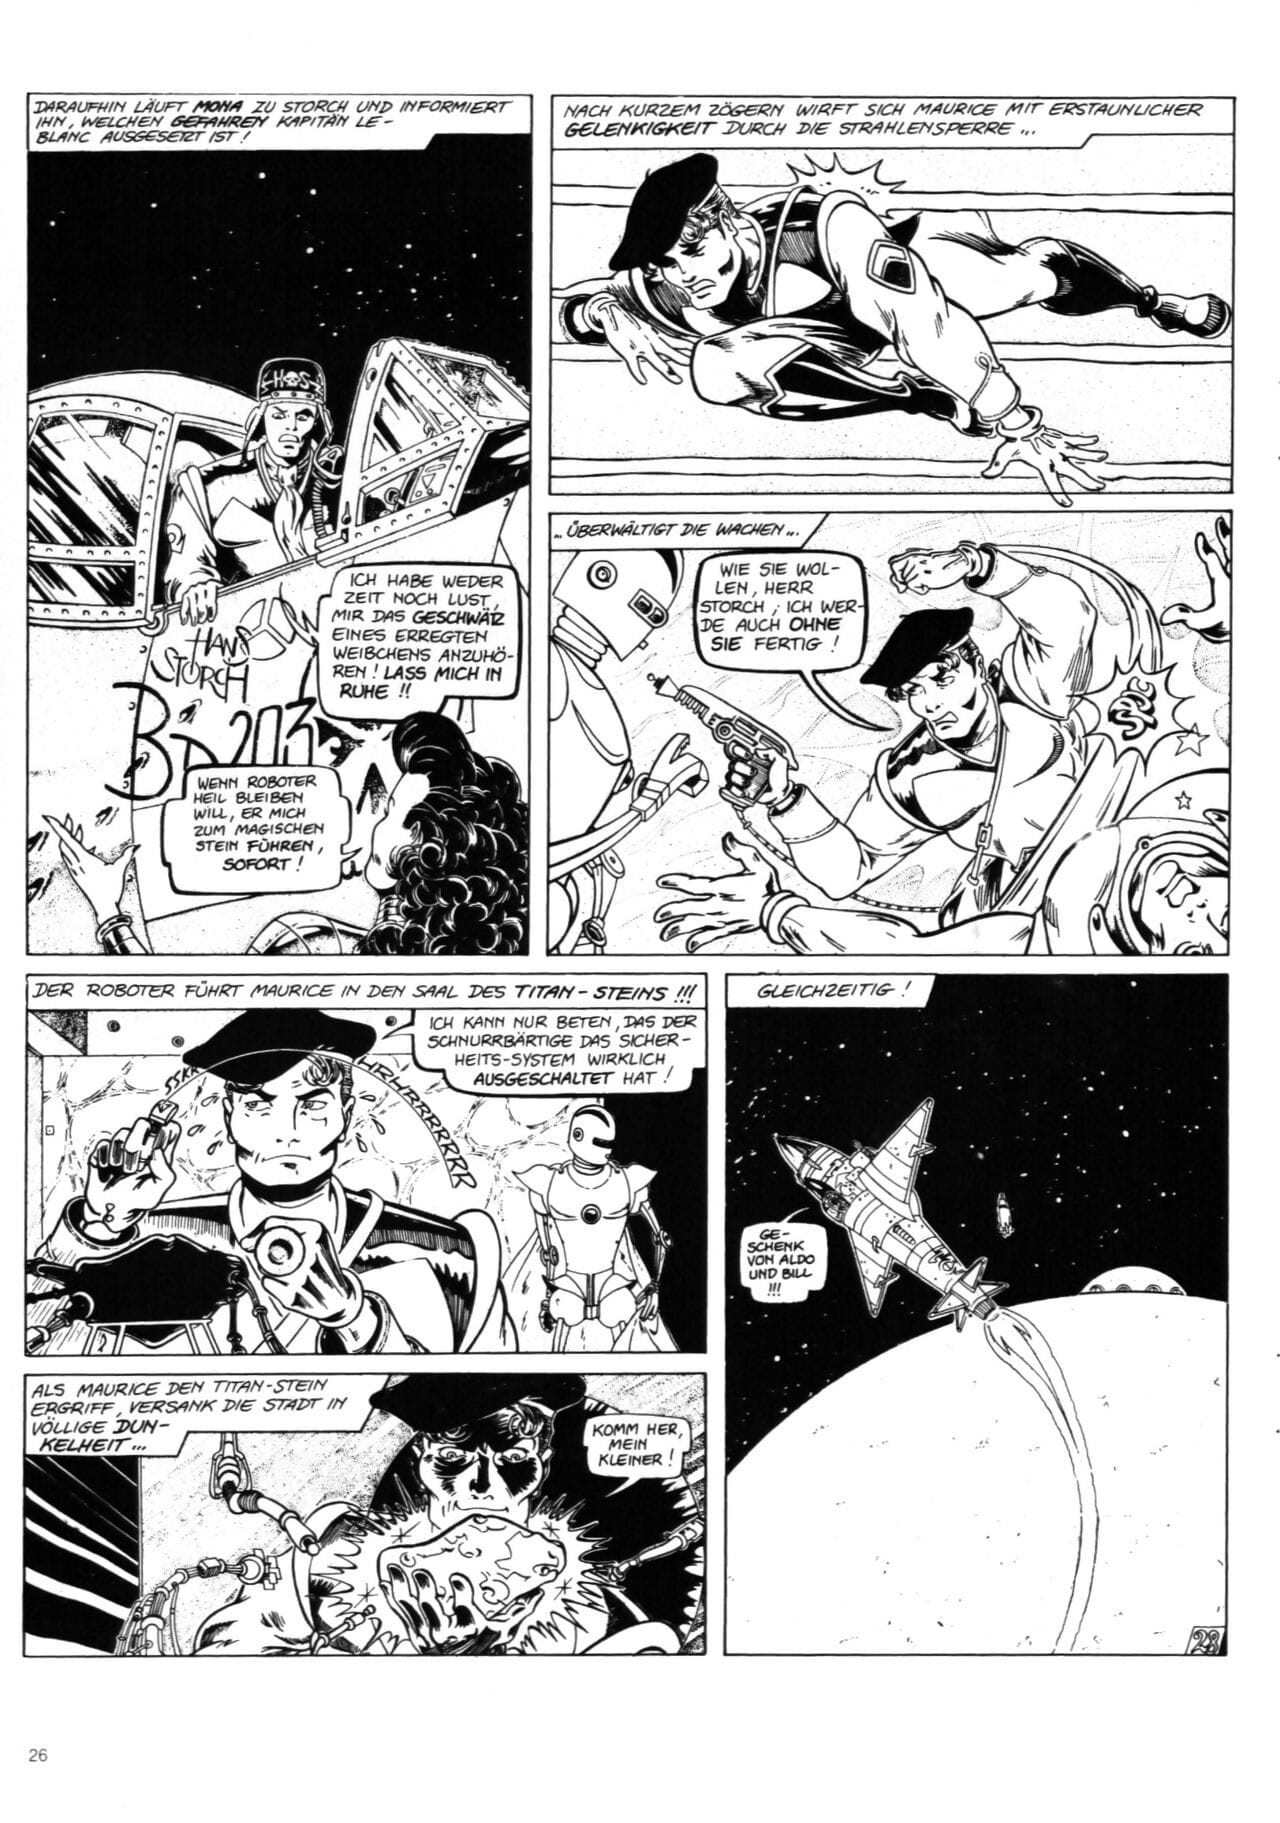 schwermetall #030 phần 2 page 1